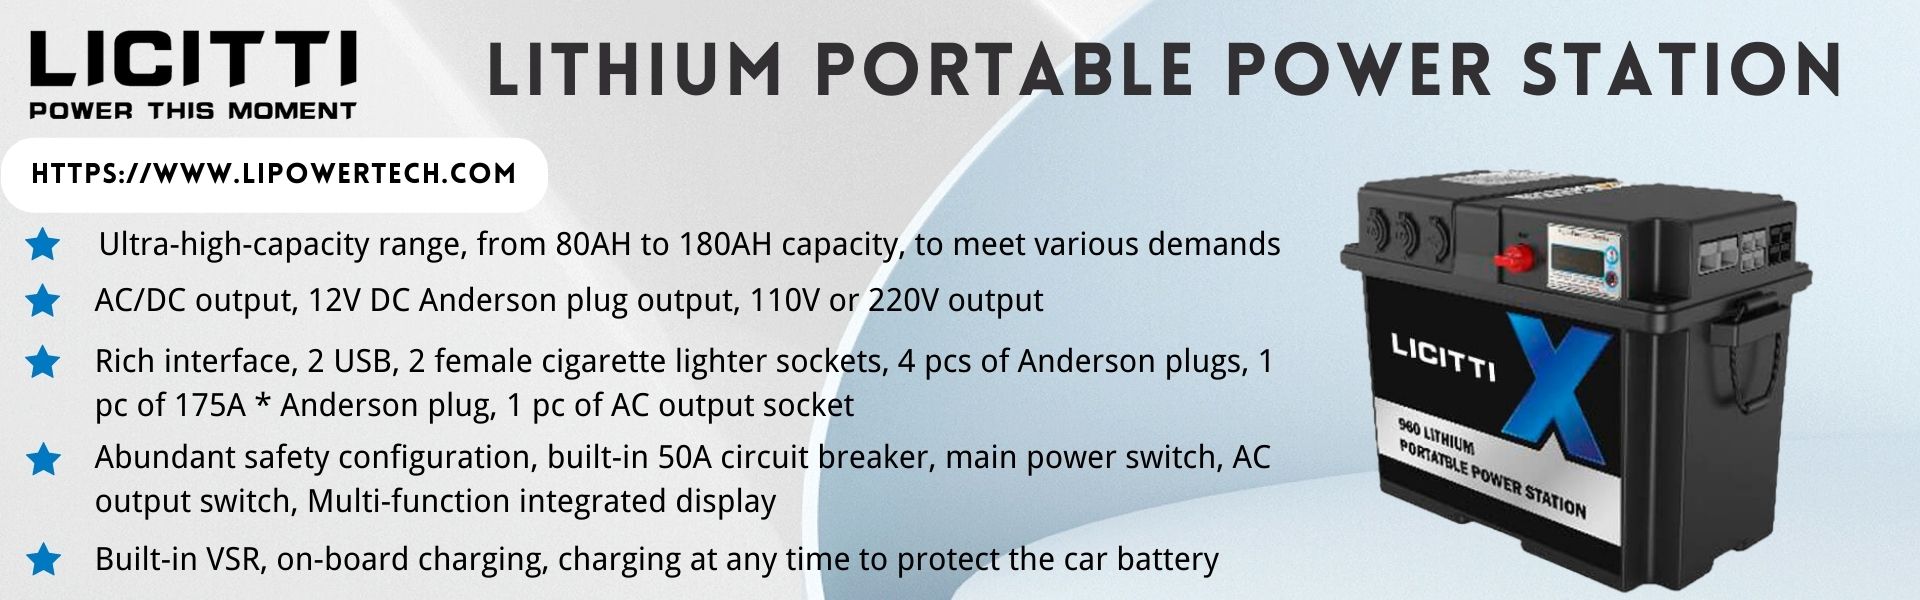 x-lithium-portable-power-station